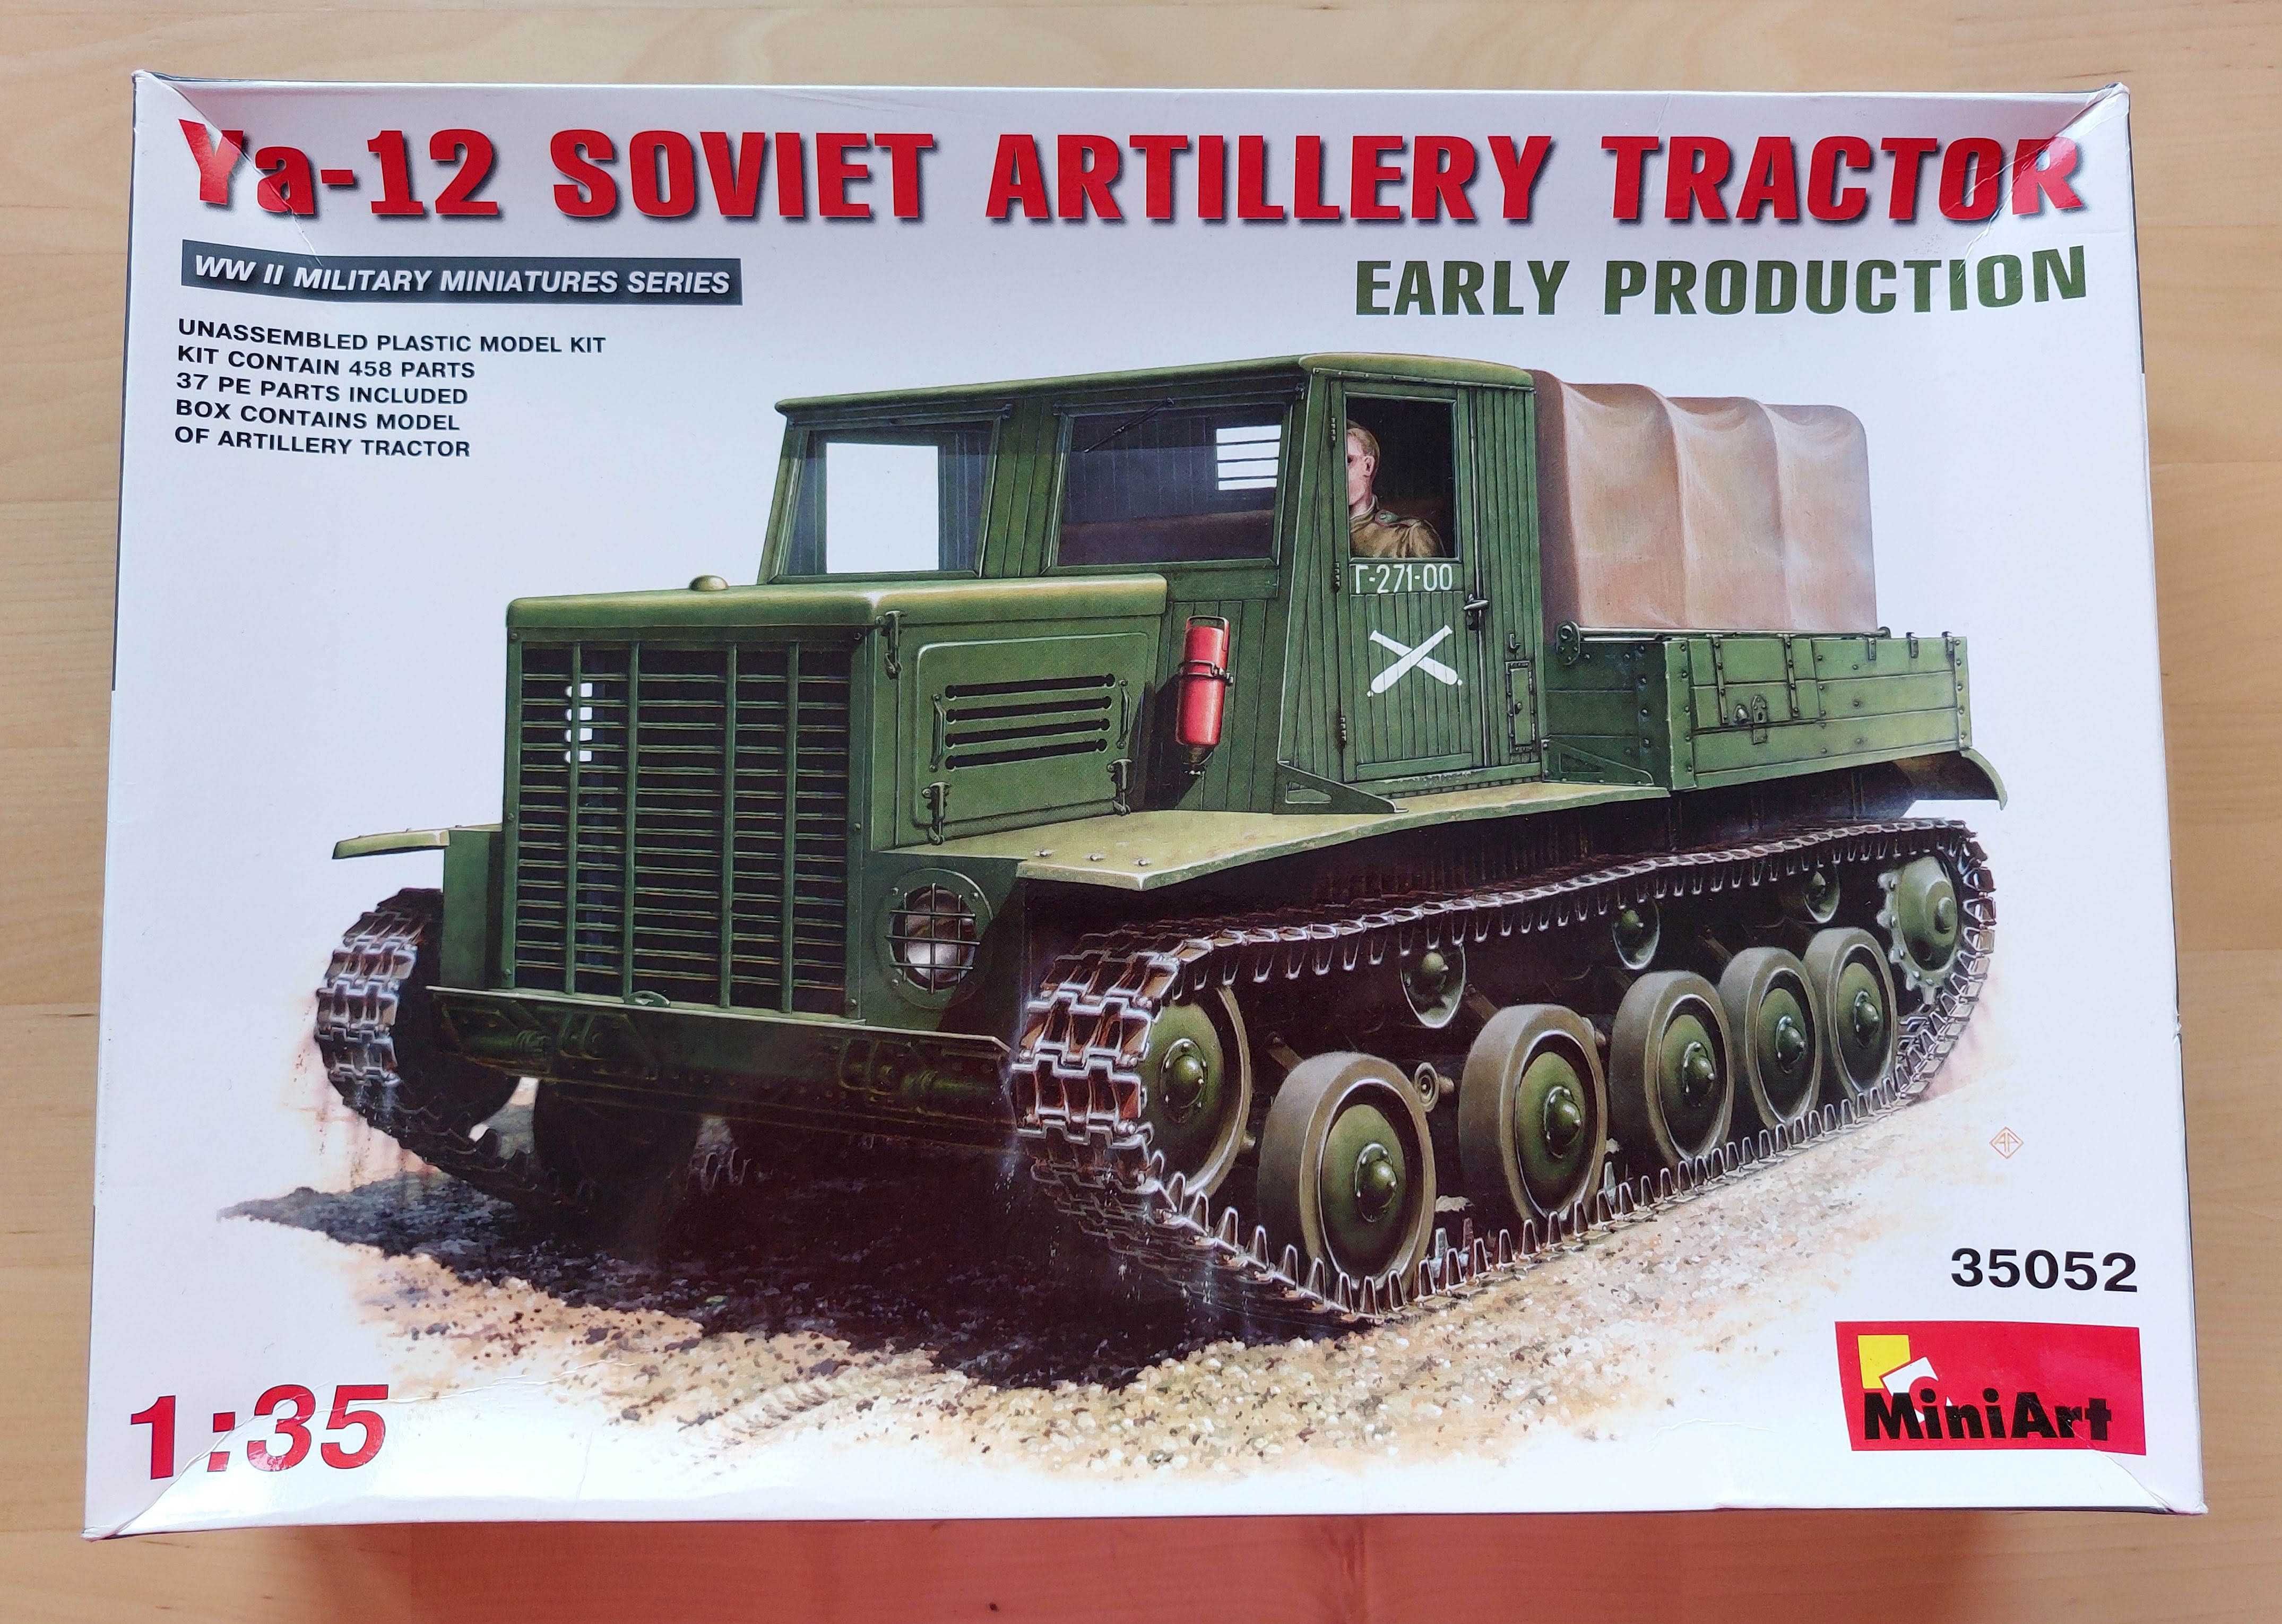 YA-12 early production - ciągnik artyleryjski 1:35 Mini art 35052